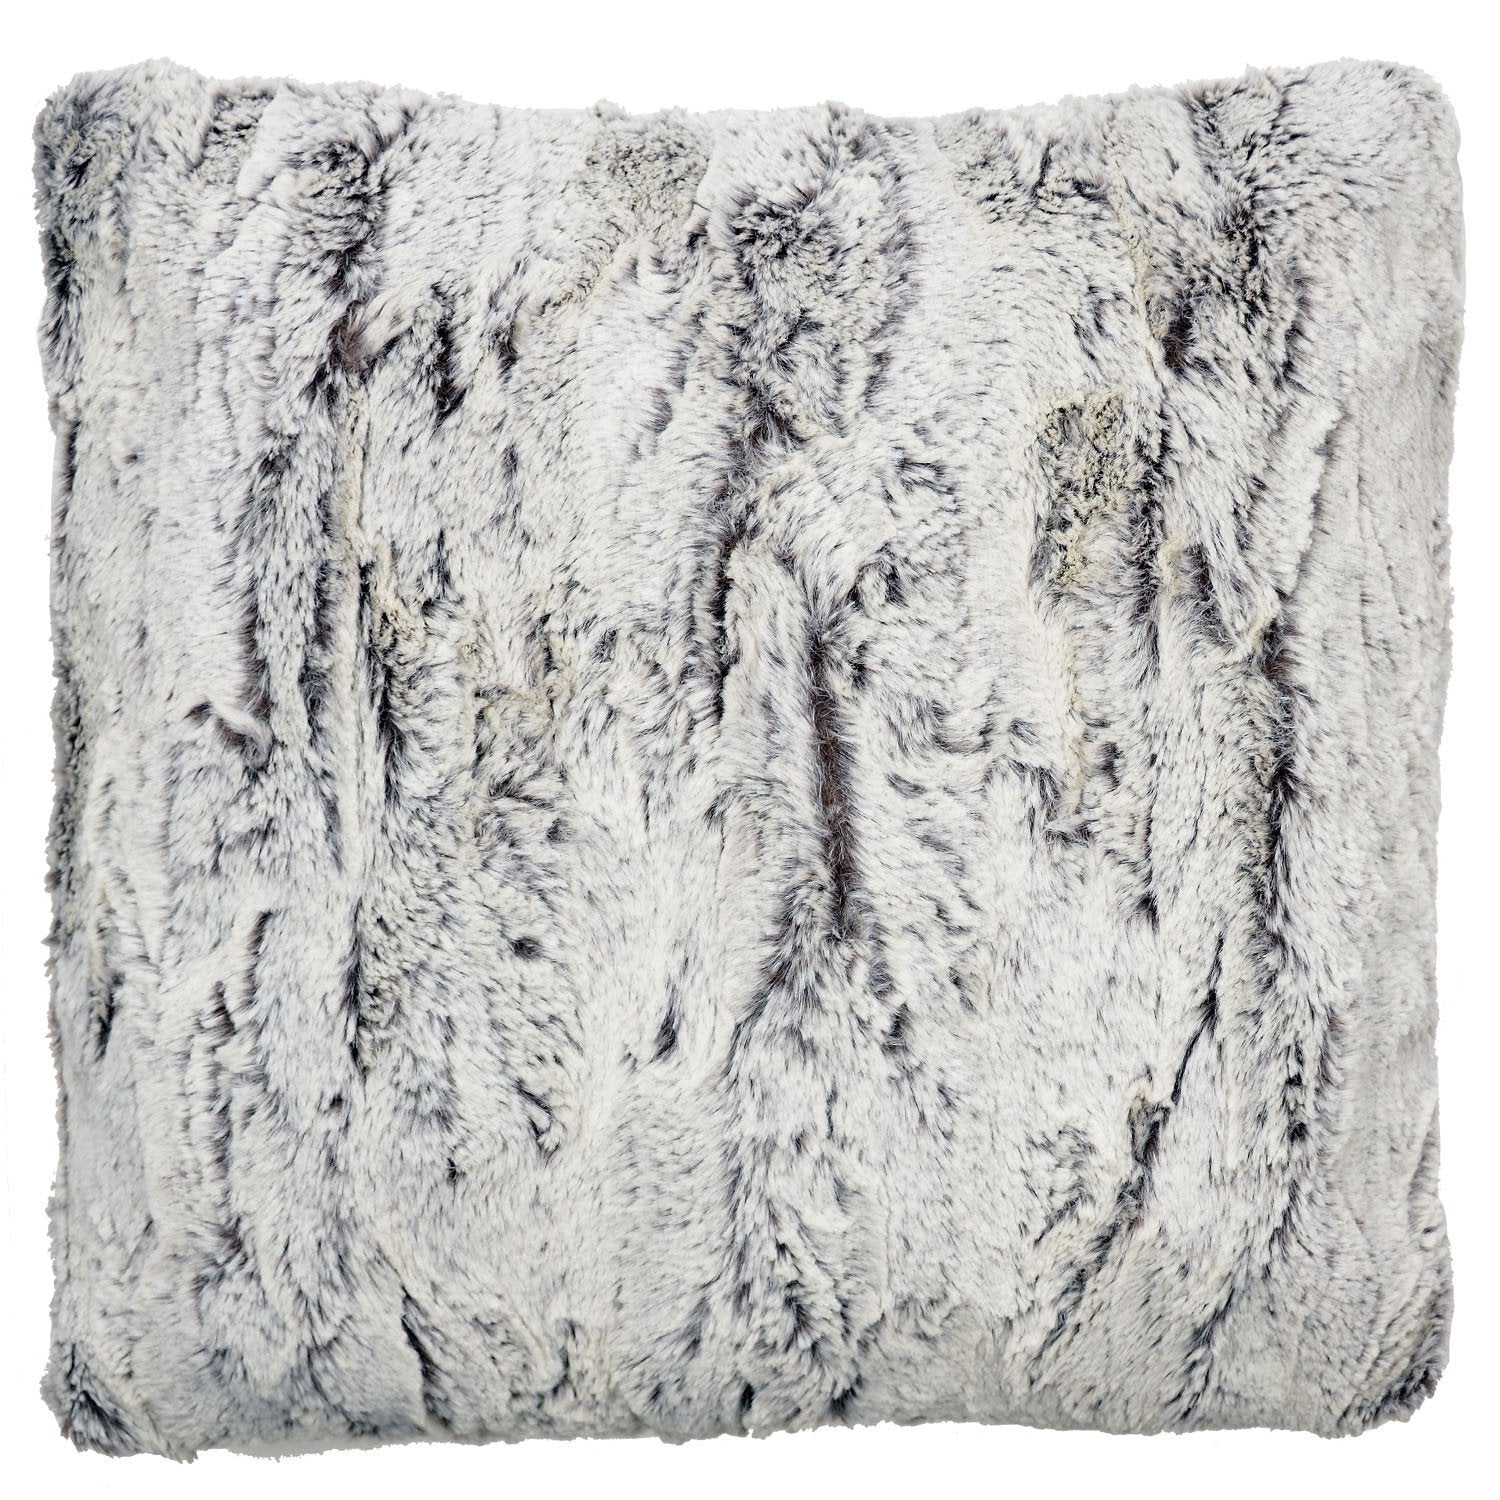 Pillow Sham in Khaki; cream with hits of gray/green | Luxury Faux Fur Designer decorative pillows | Handmade by Pandemonium Millinery Seattle, WA usa